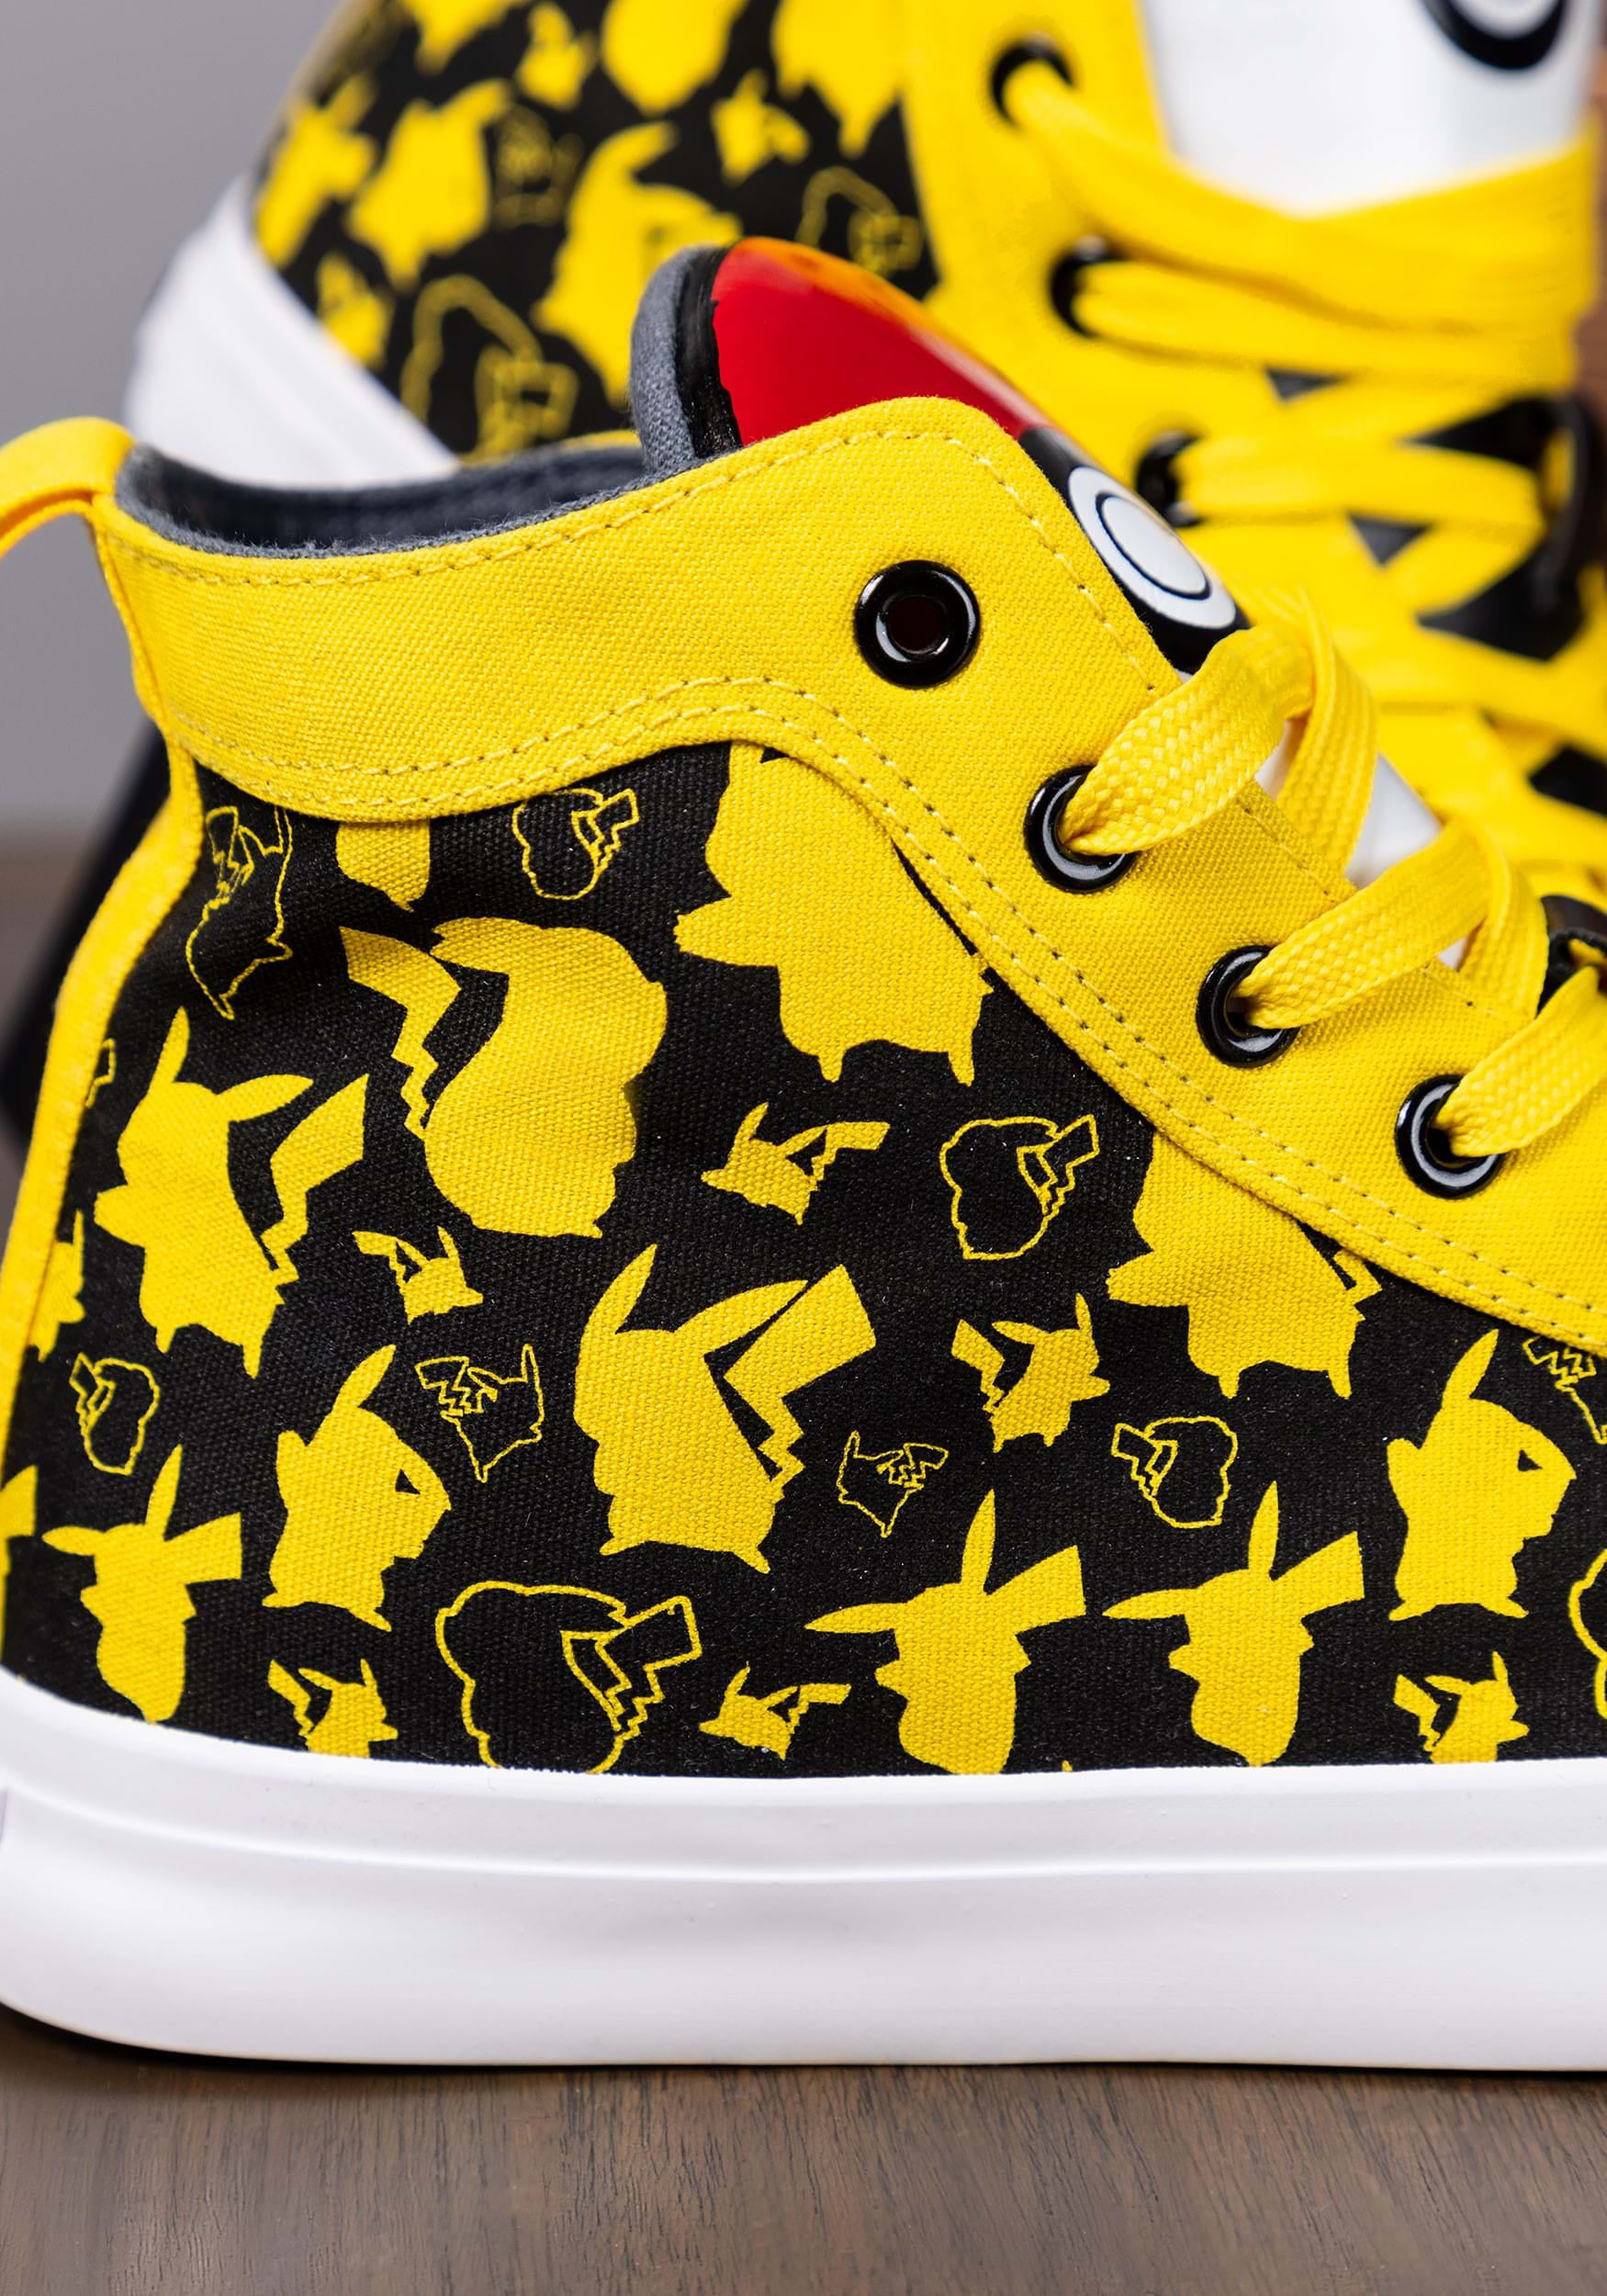 Converse Sneakers - Pokemon Pikachu High Top Adult Shoes - Walmart.com